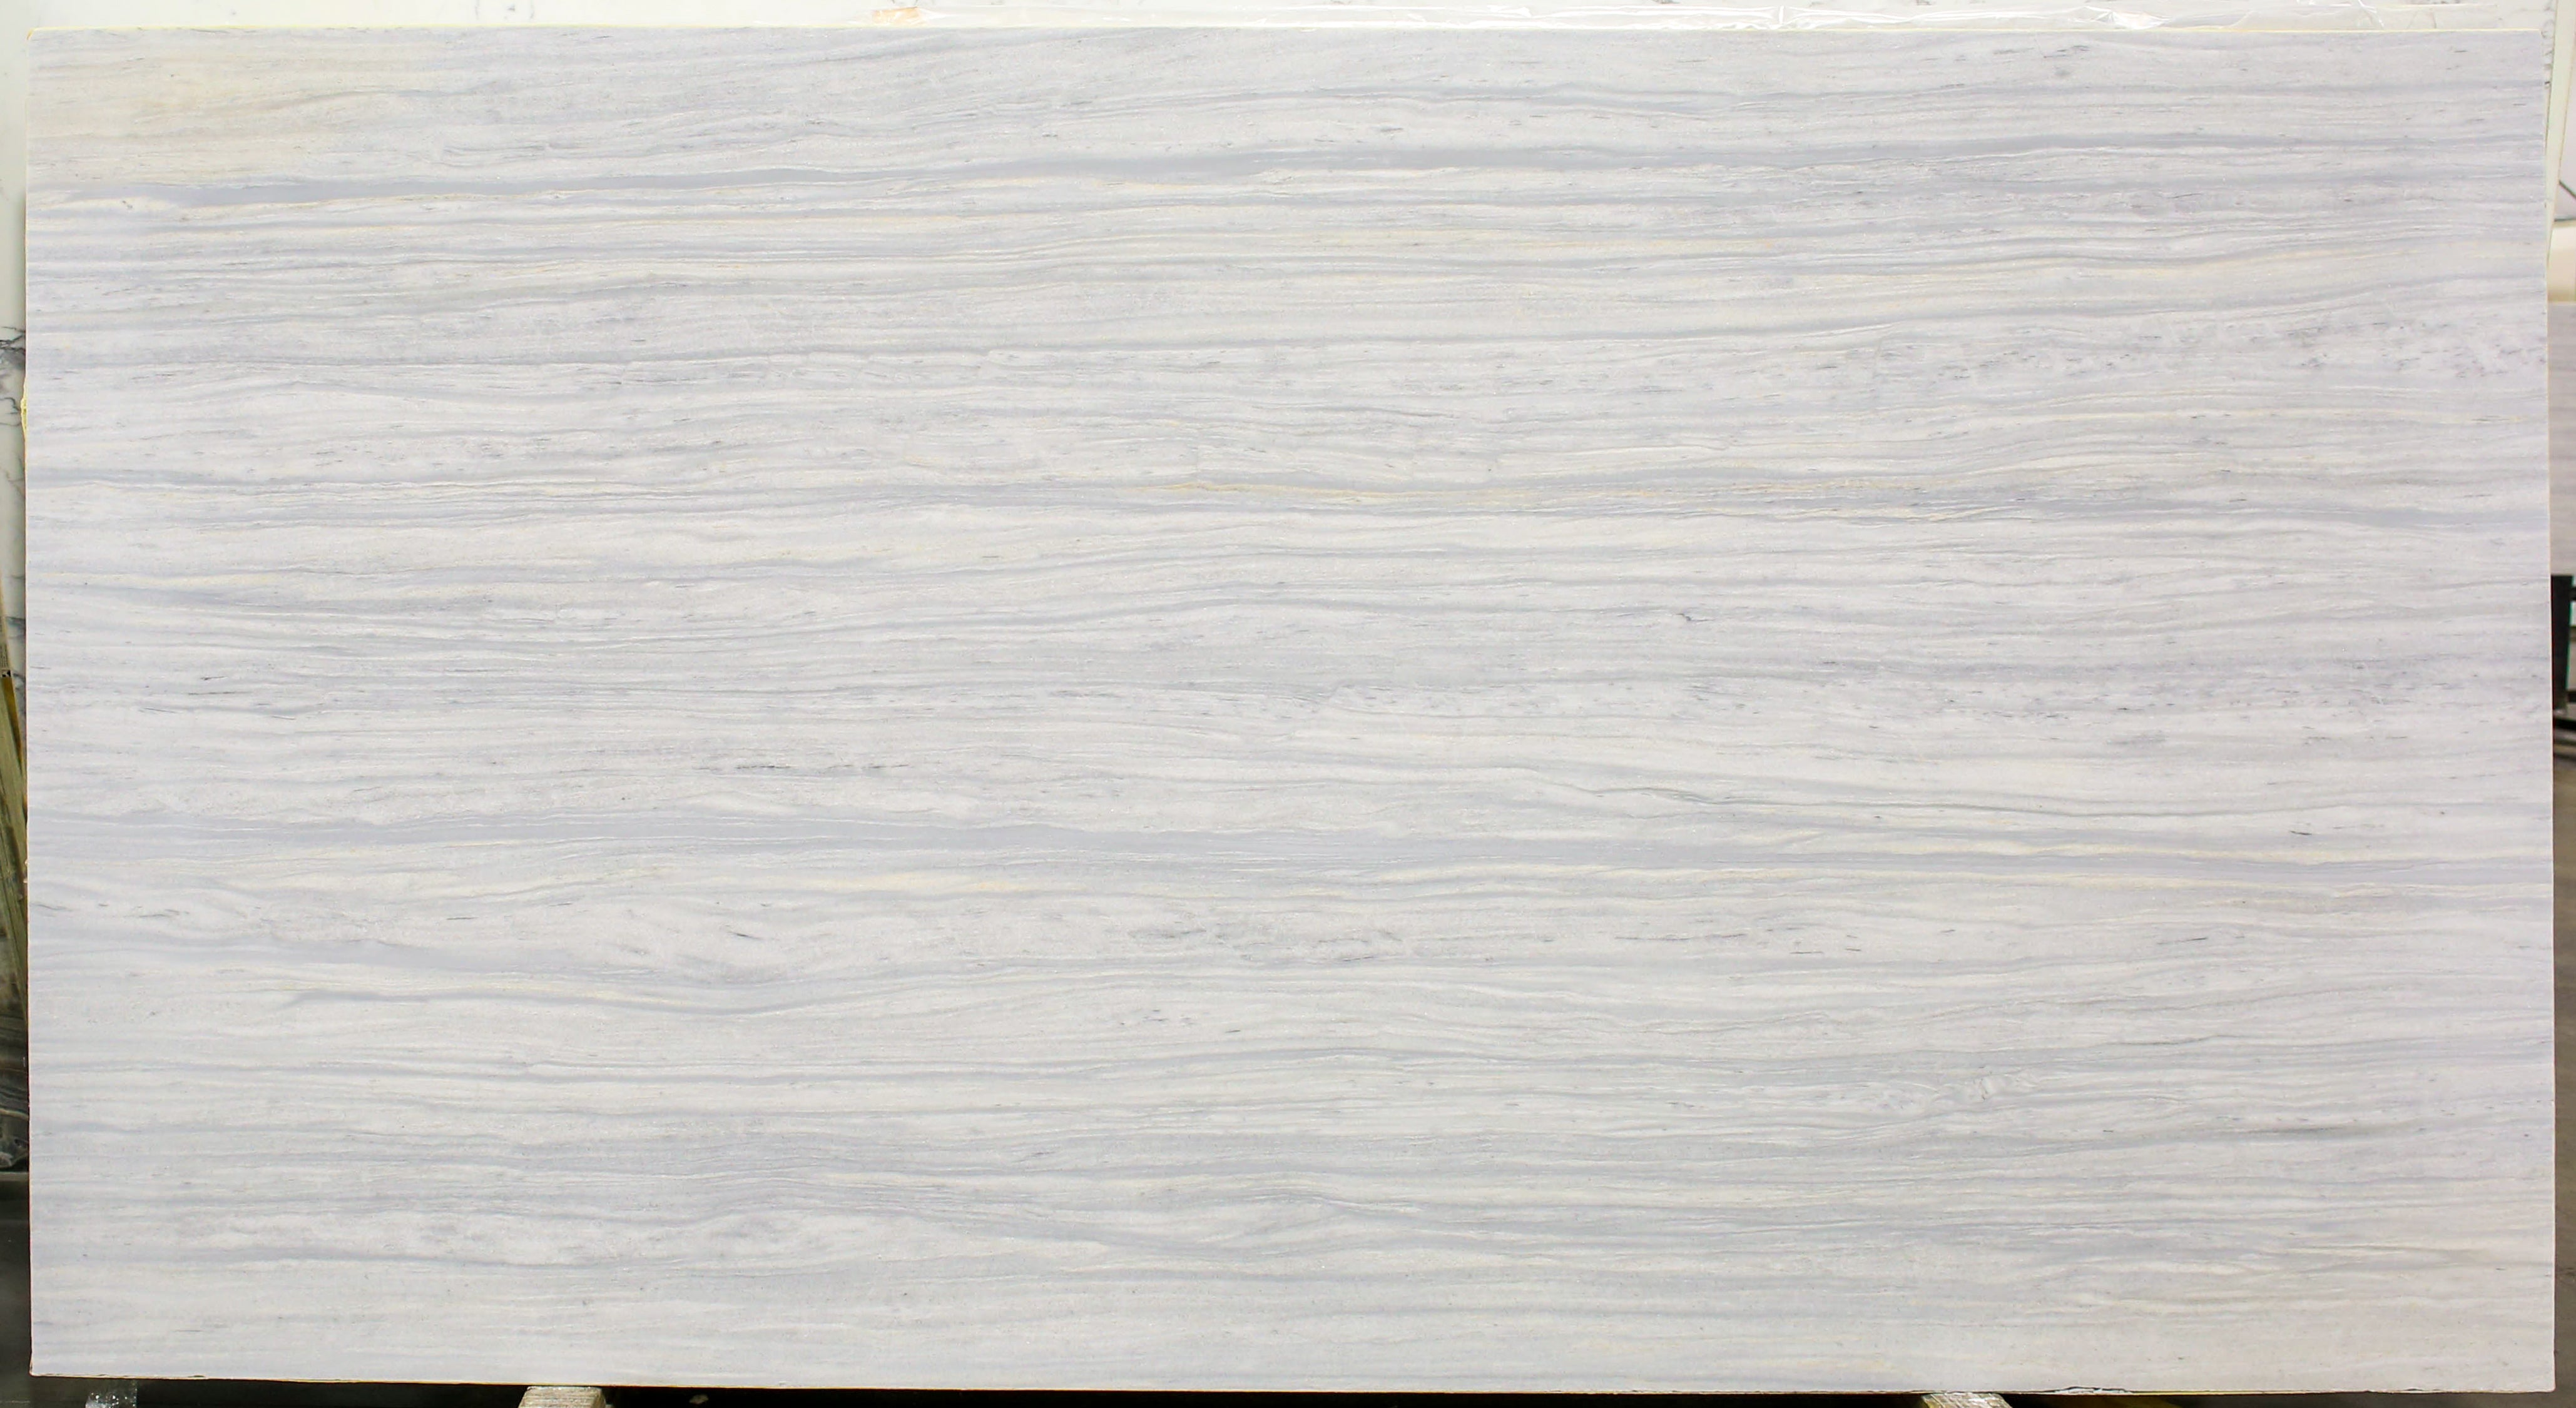  Minerva Grey Marble Slab 3/4  Honed Stone - 9180122#84 -  60x113 